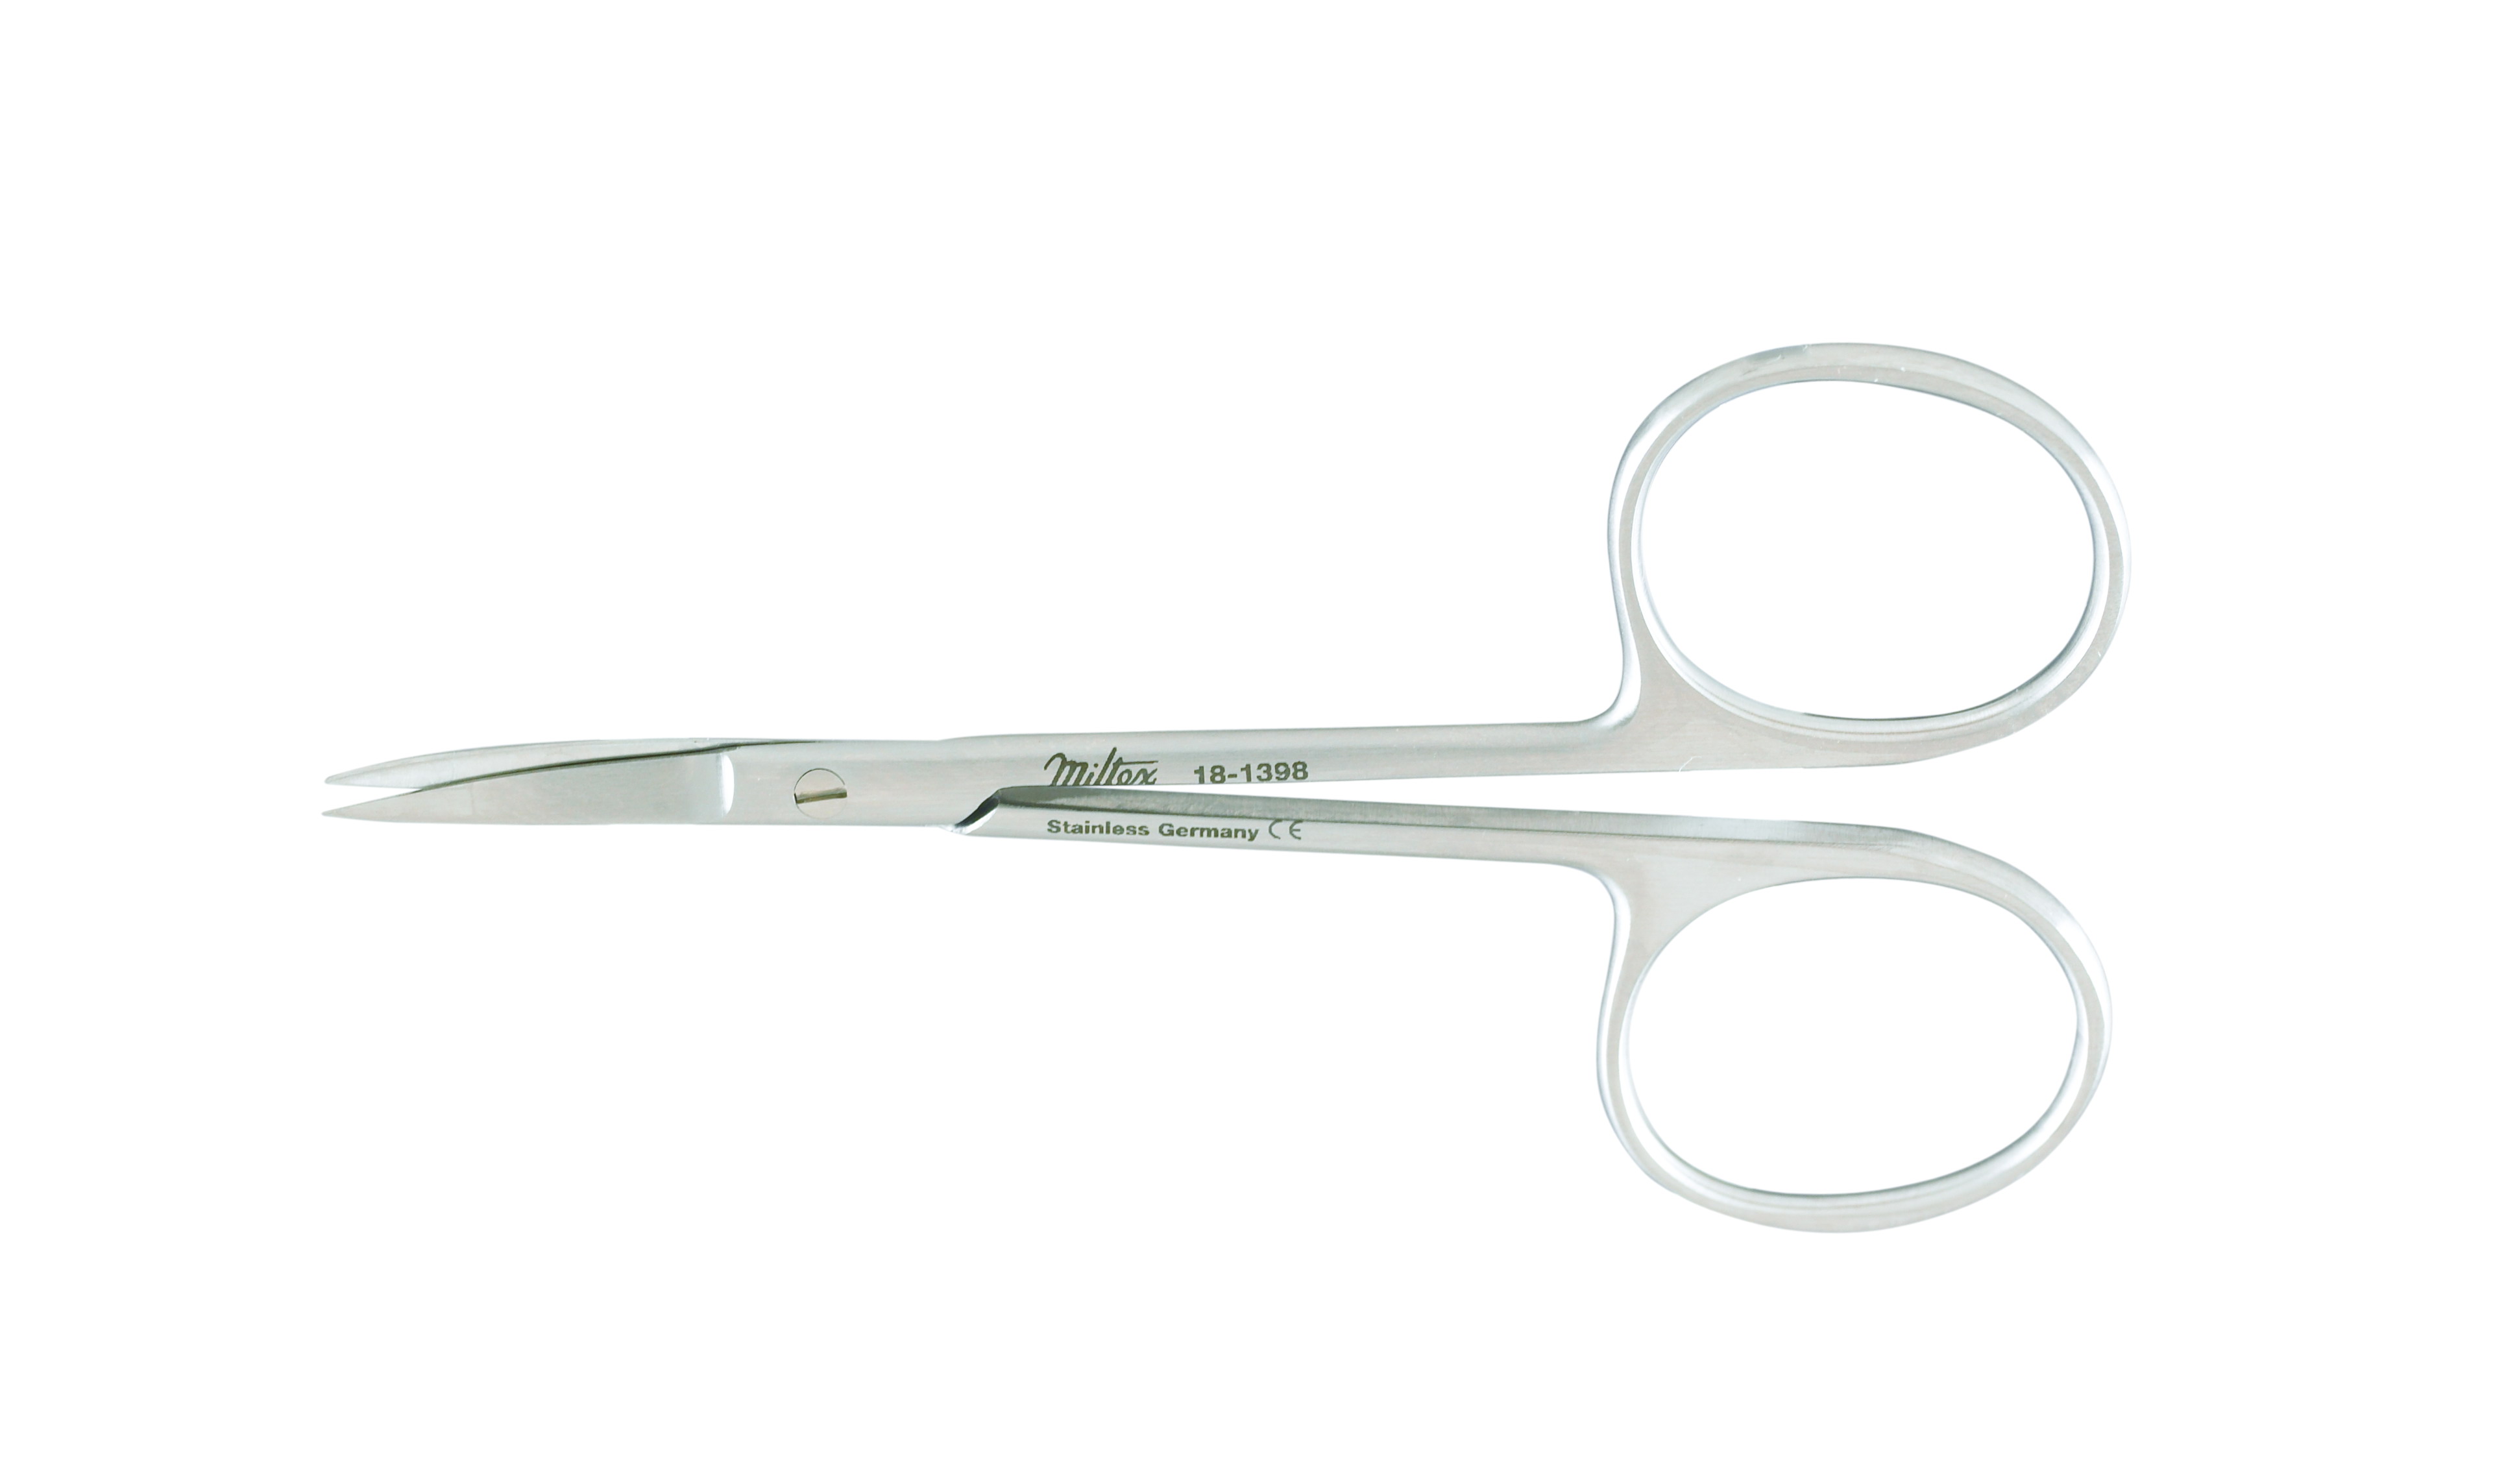 iris-scissors-3-1-2-89-cm-curved-with-20-mm-blades-deliate-18-1398-miltex.jpg